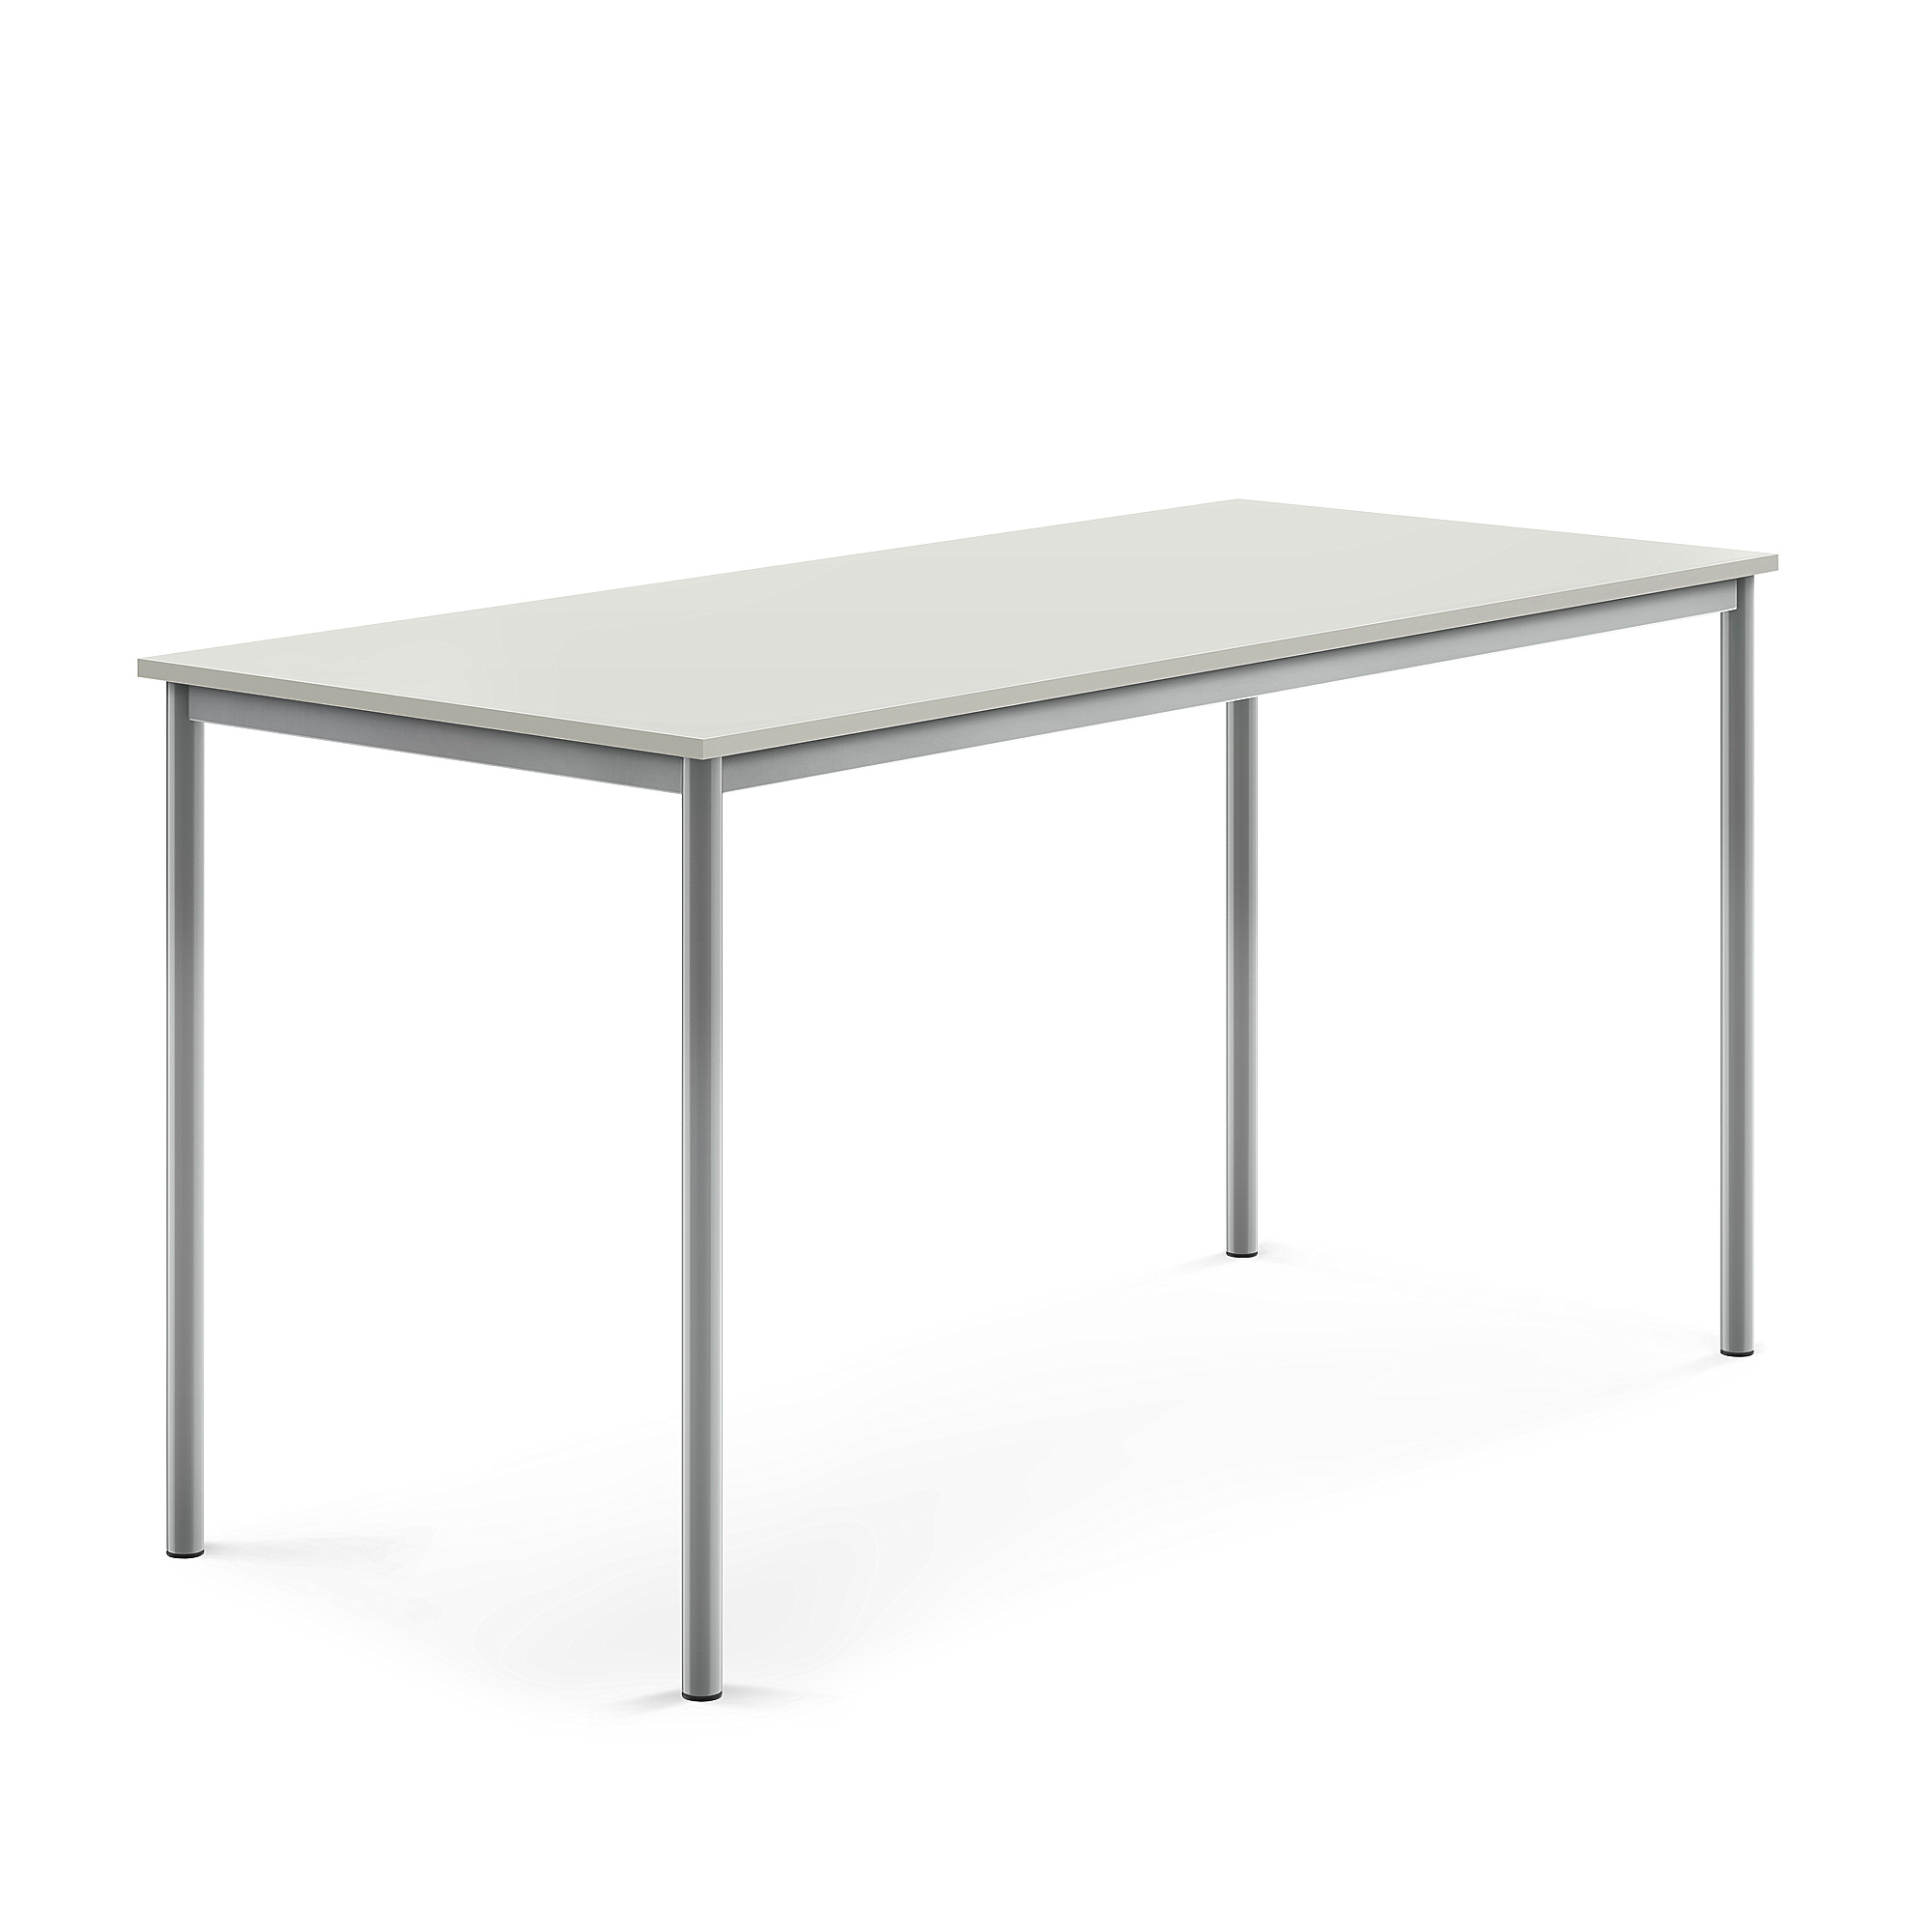 Stůl BORÅS, 1800x800x900 mm, stříbrné nohy, HPL deska, šedá